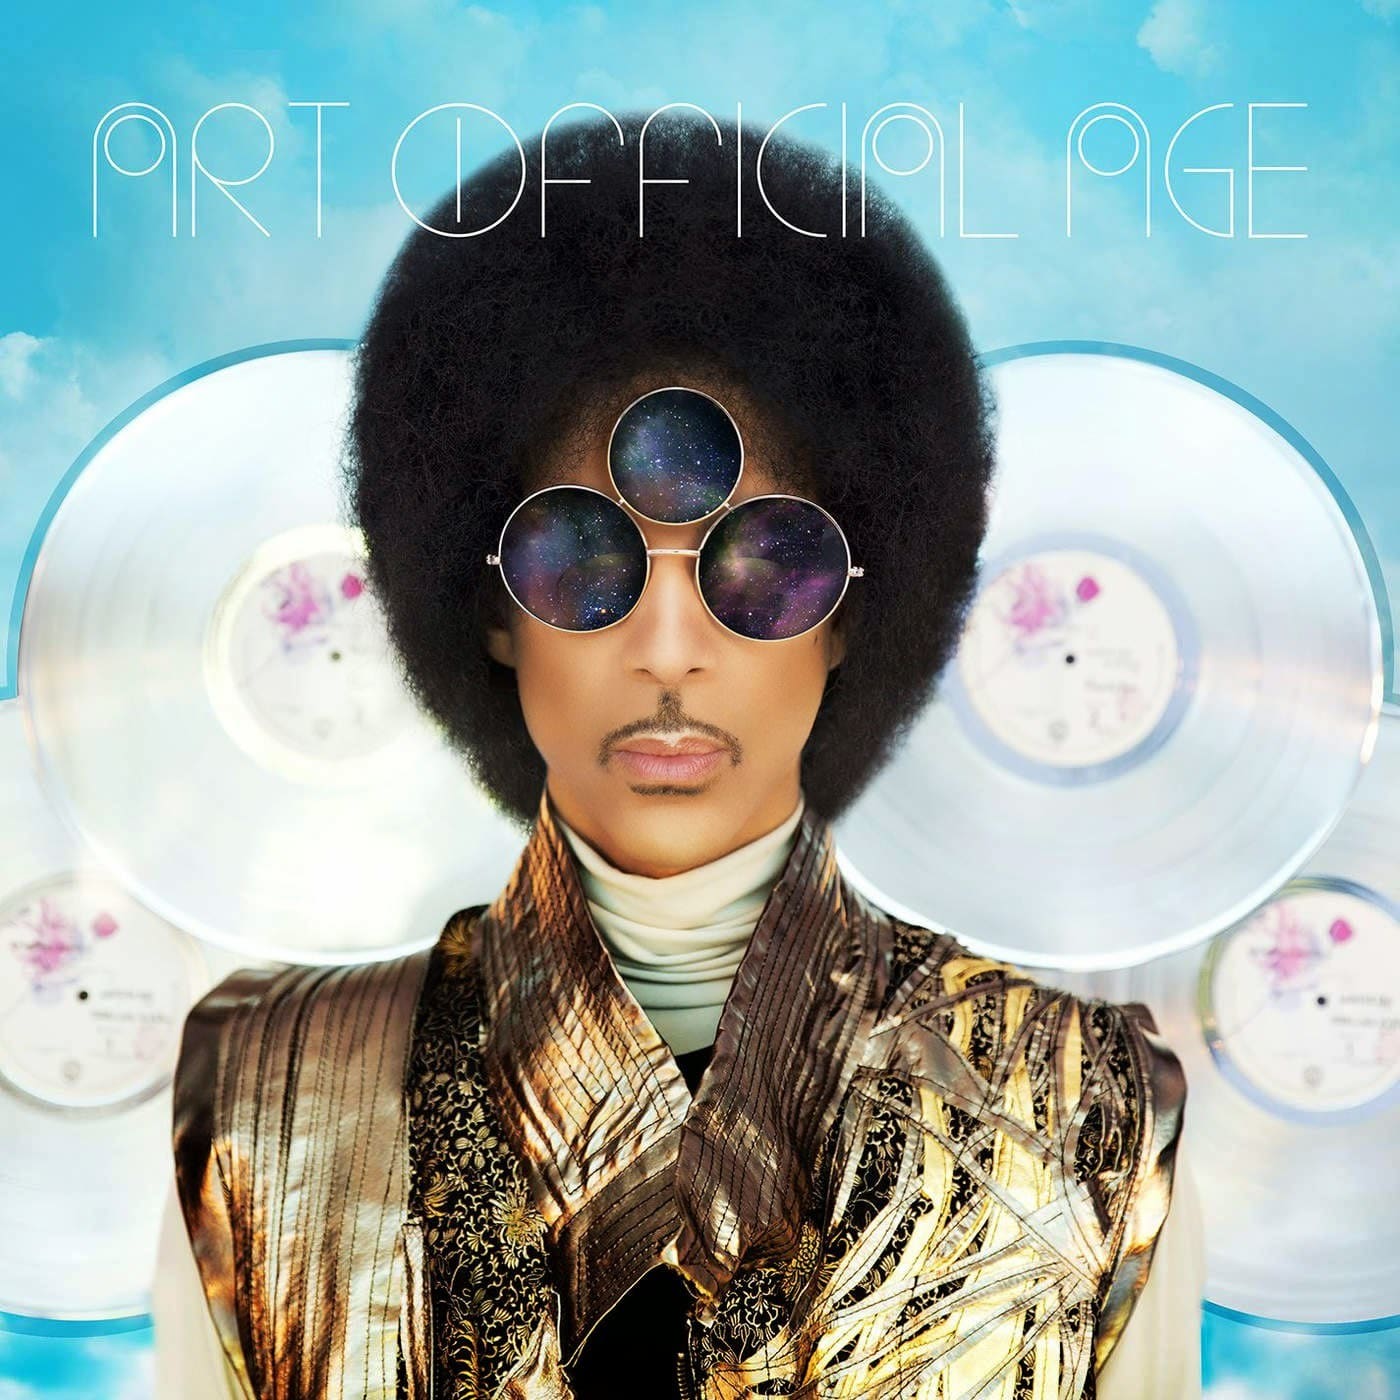 prince-art-official-age-album-cover